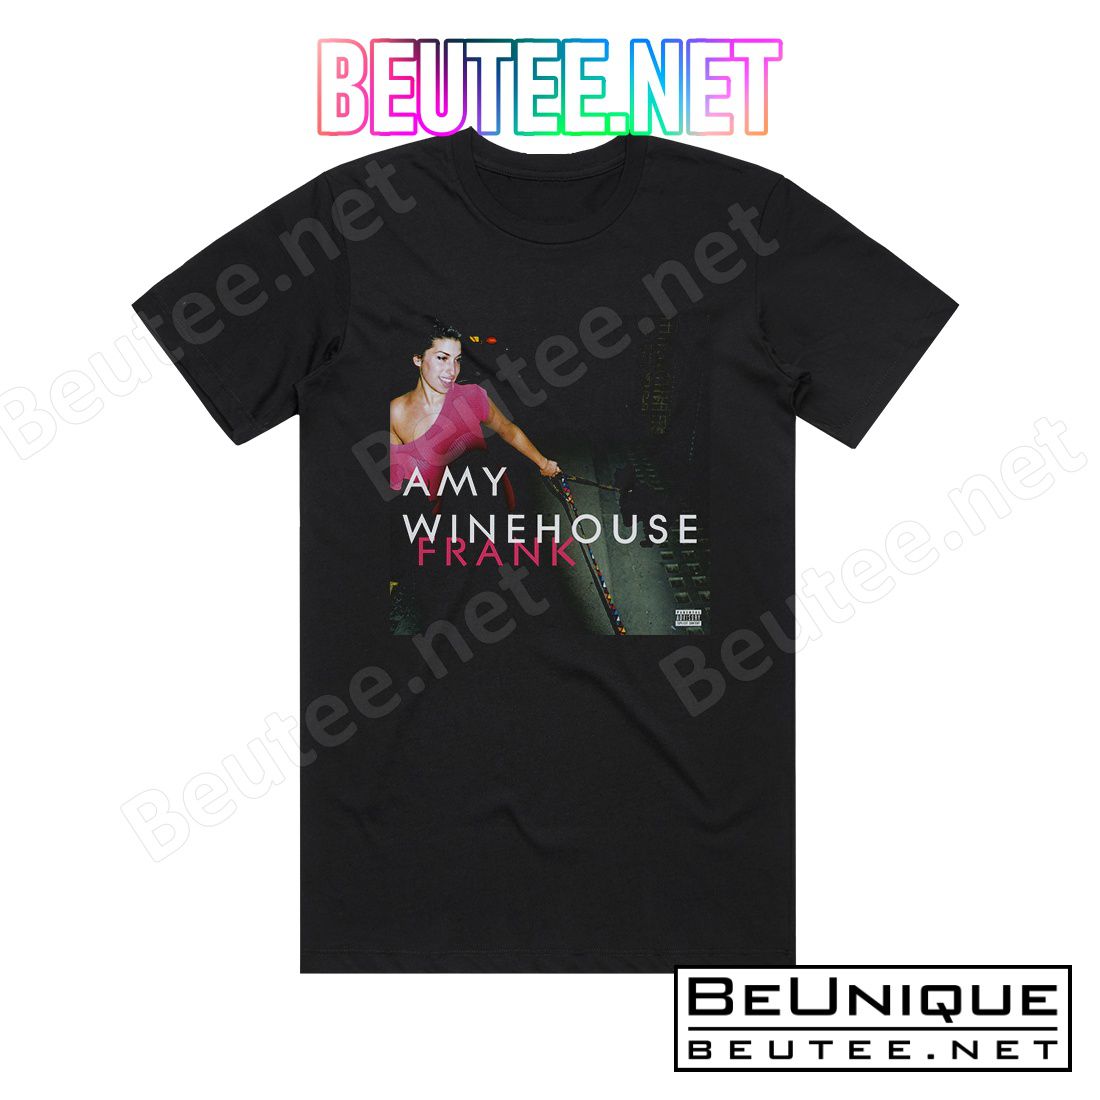 Amy Winehouse Frank 1 Album Cover T-Shirt